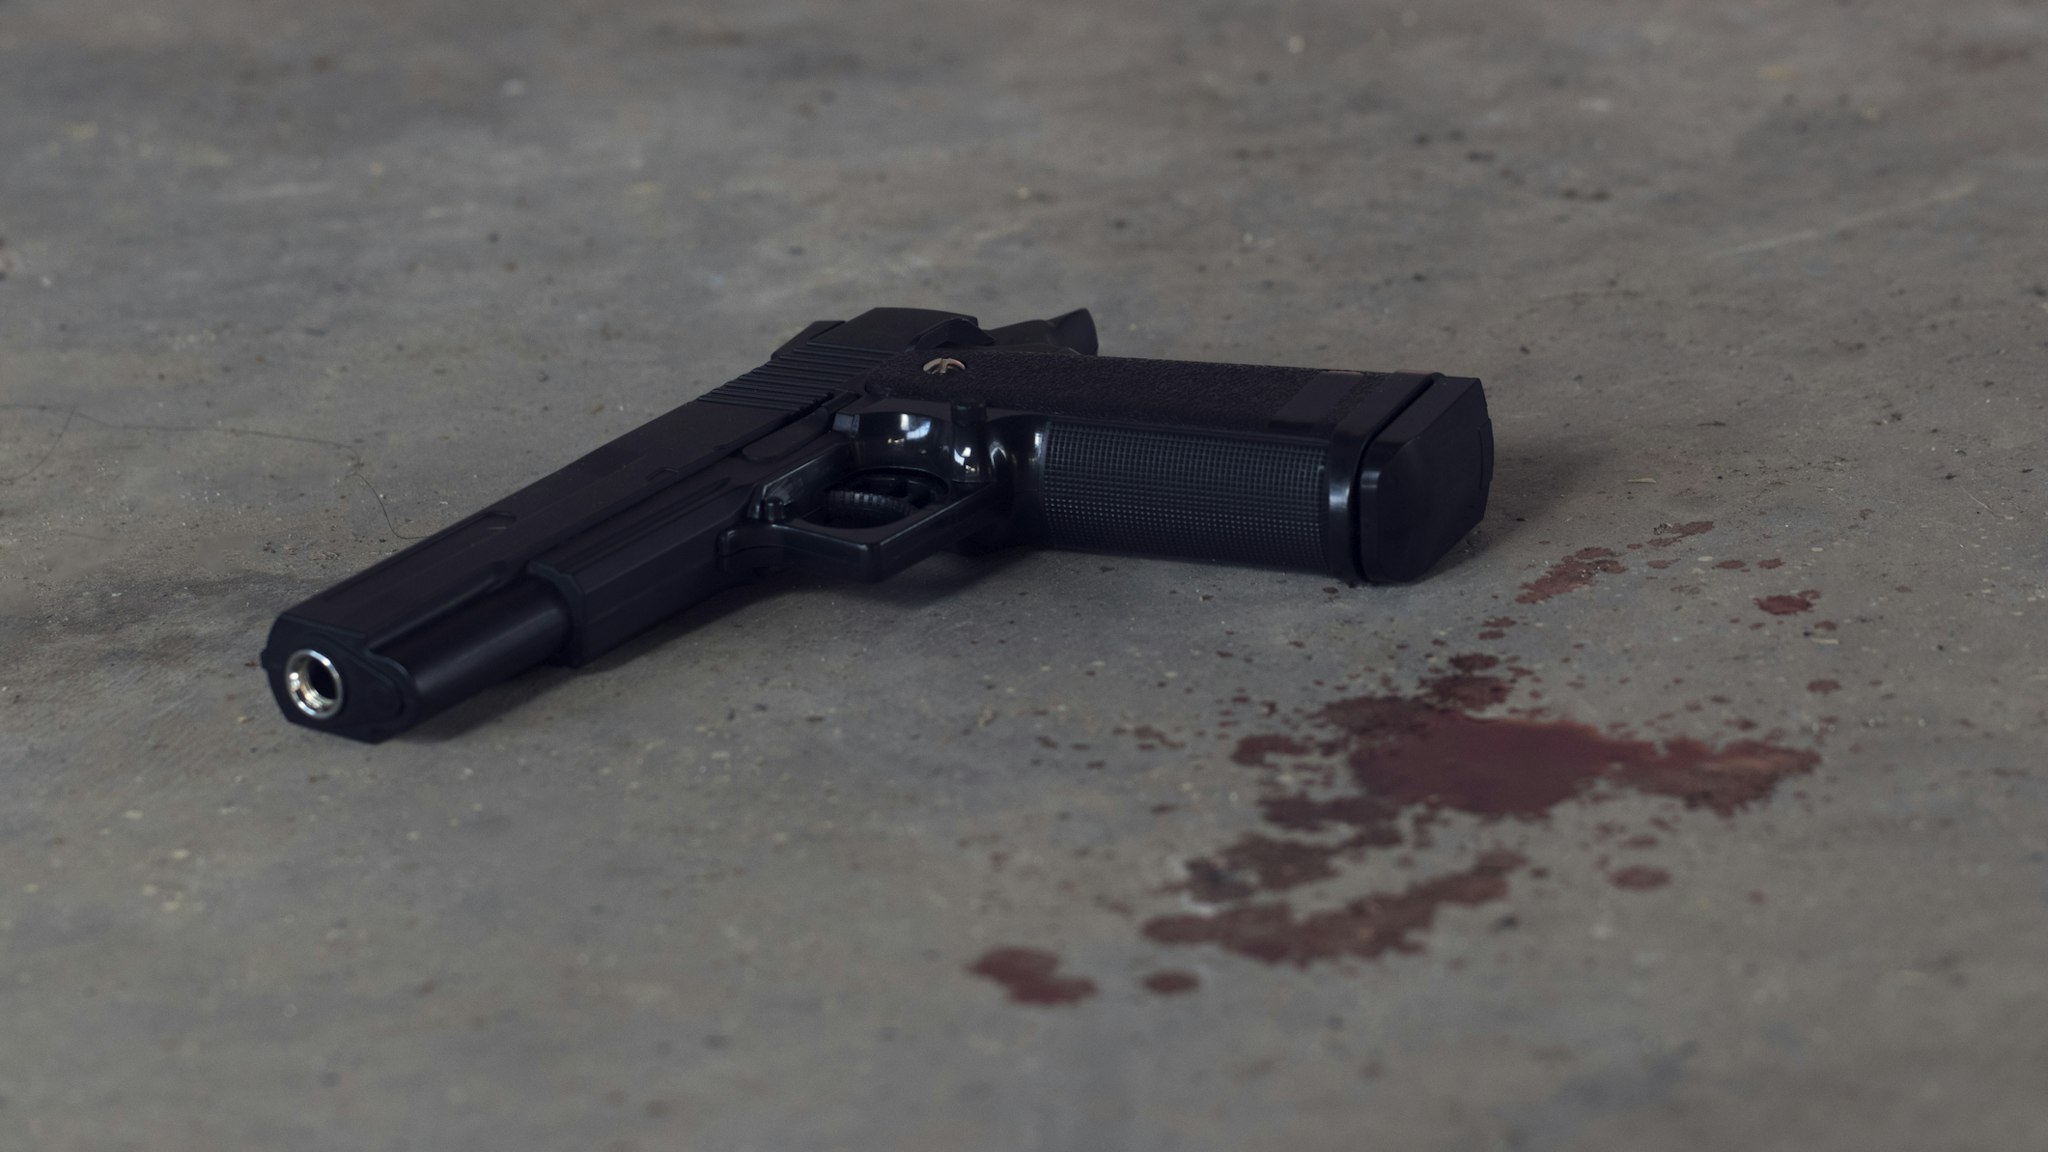 High Angle View Of Black Handgun And Blood On Floor - stock photo